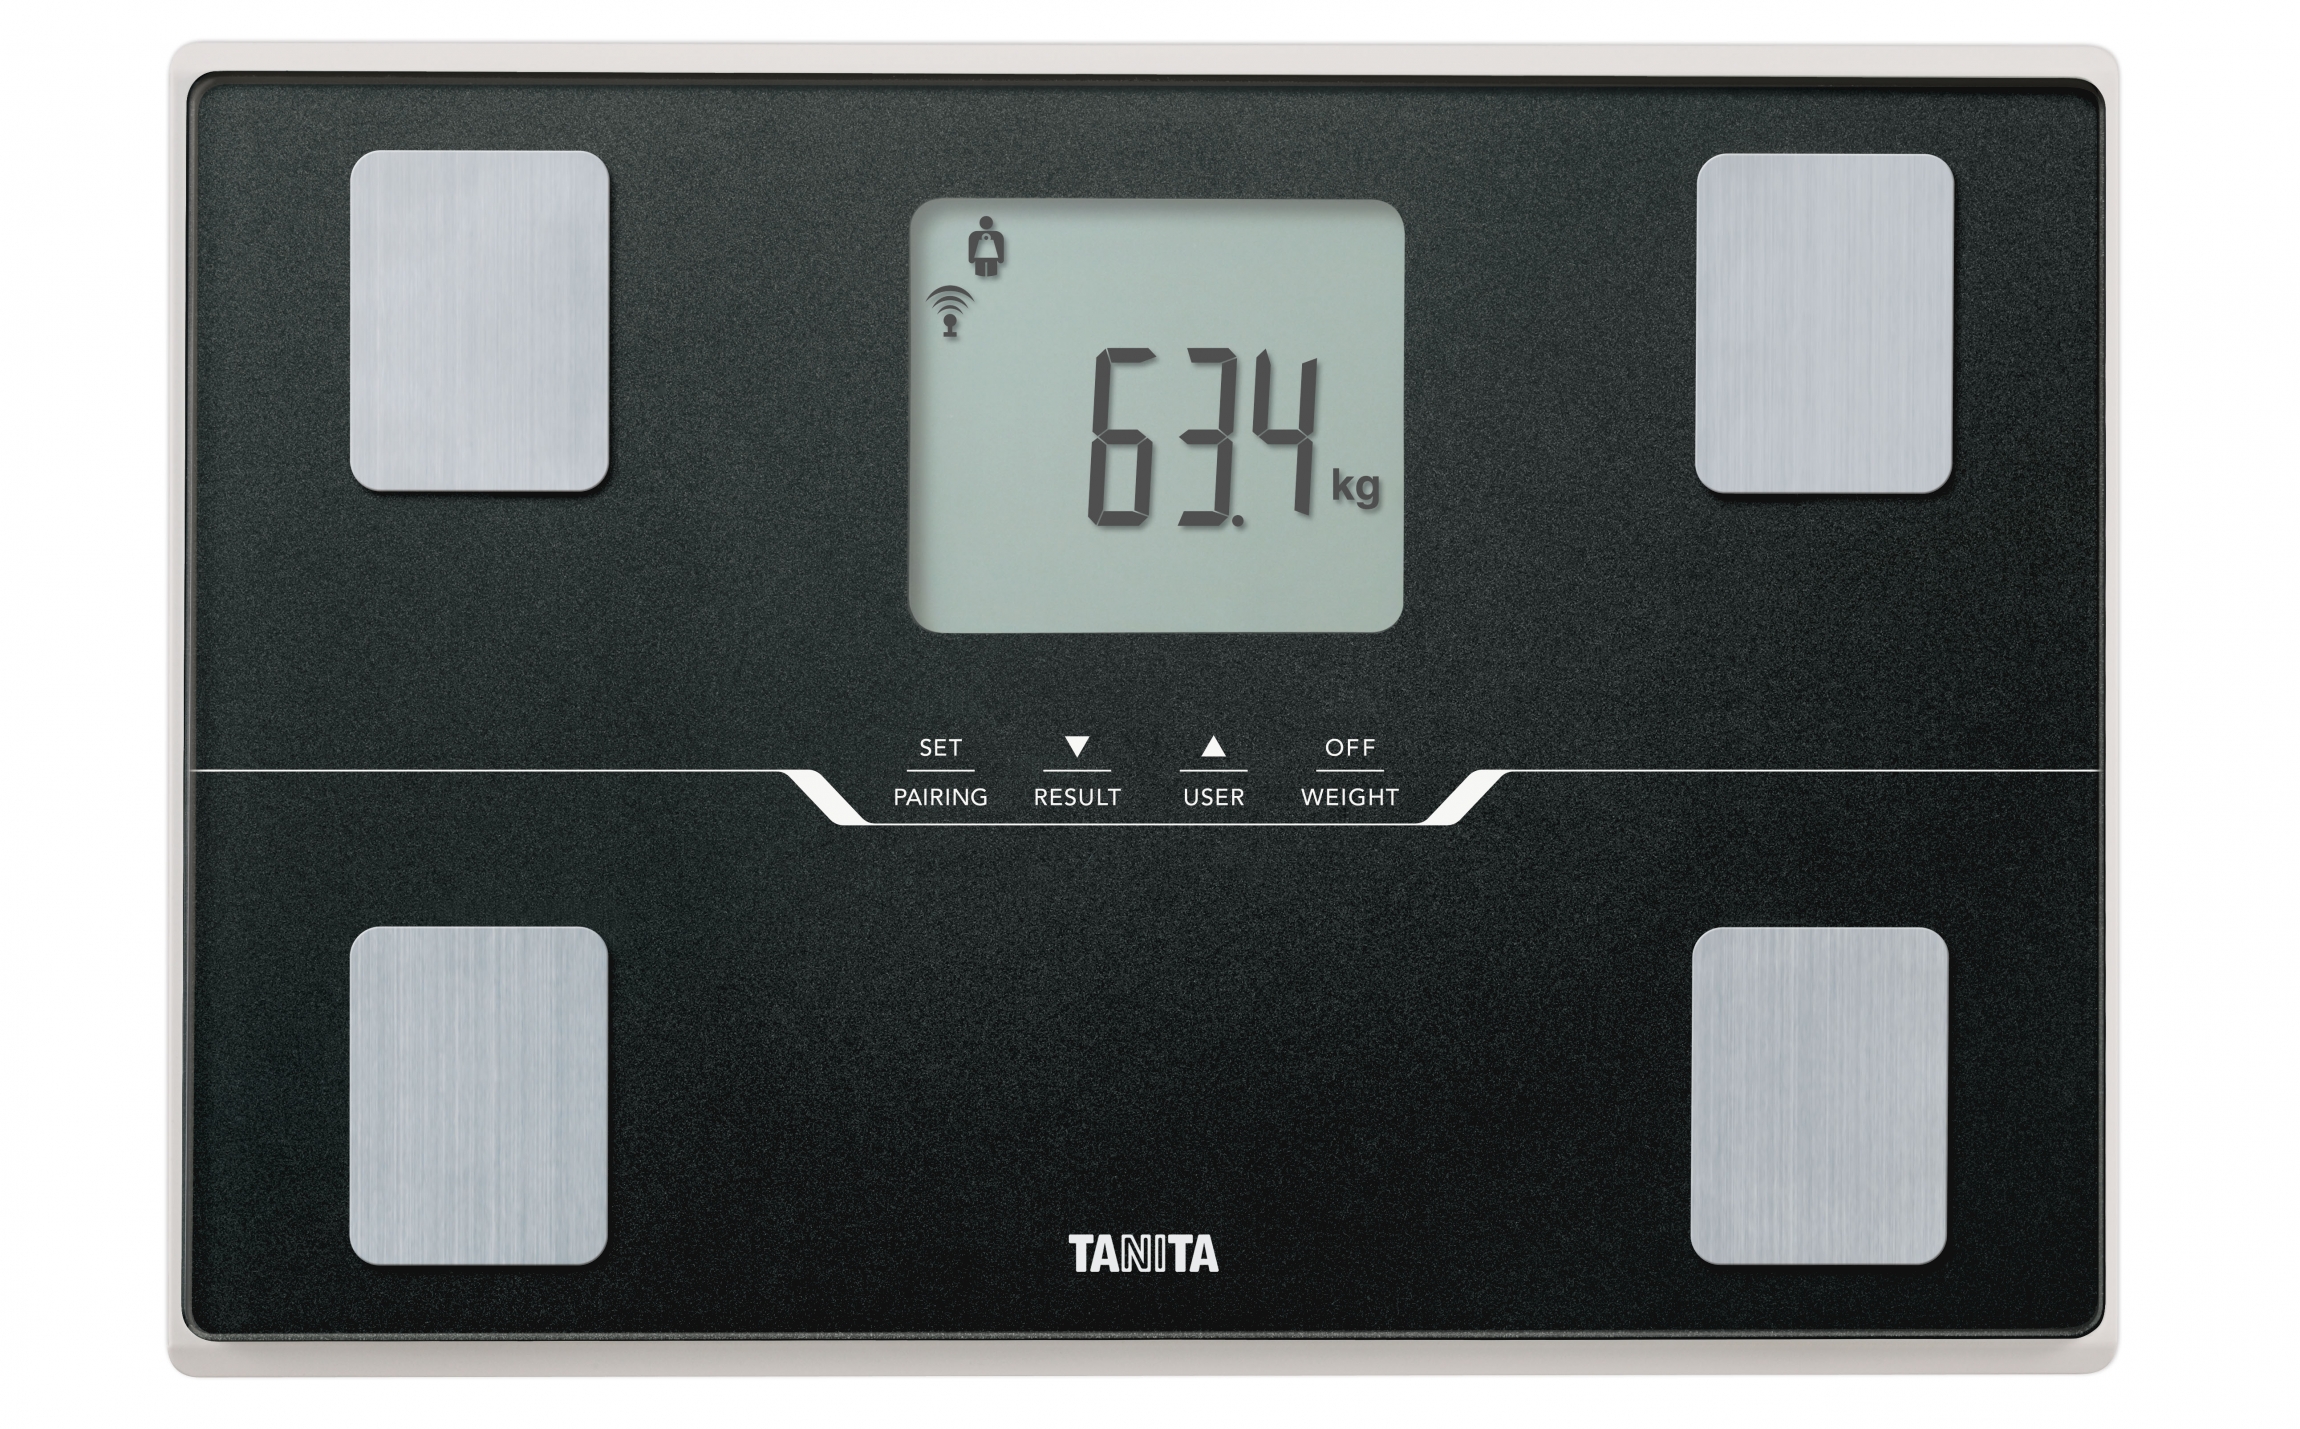 Tanita Body Composition Scale - TISC240MA 200 kg